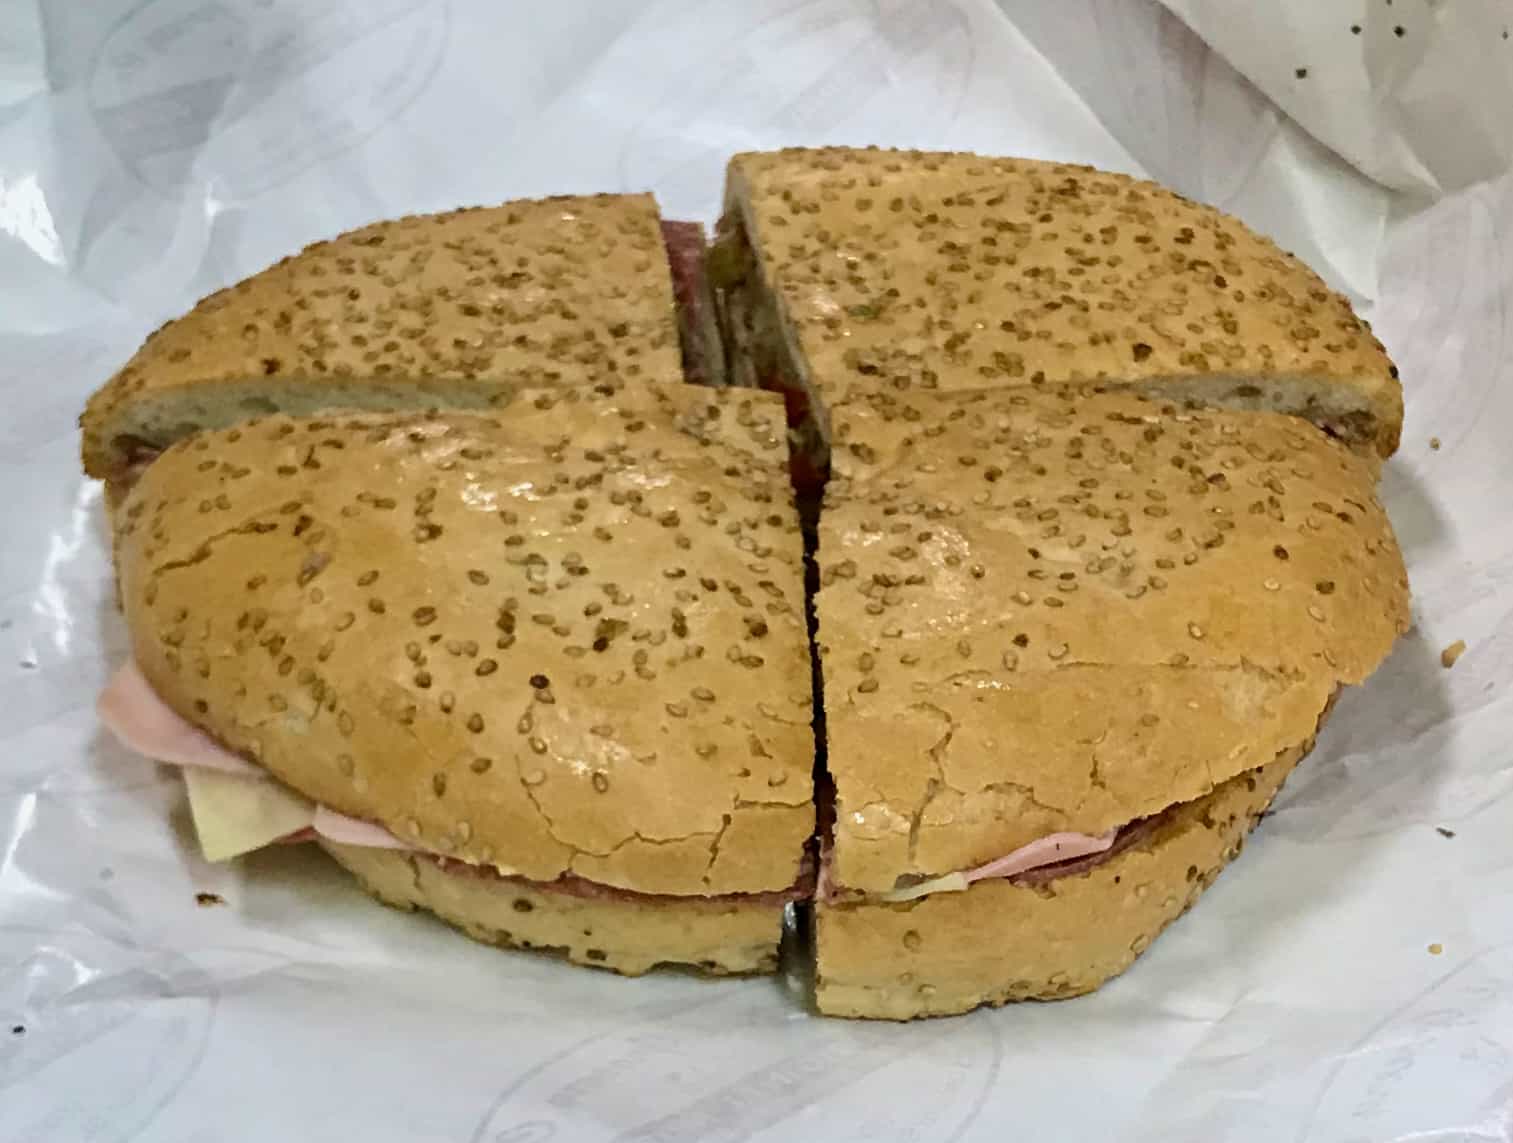 A muffuletta sandwich cut into four sections